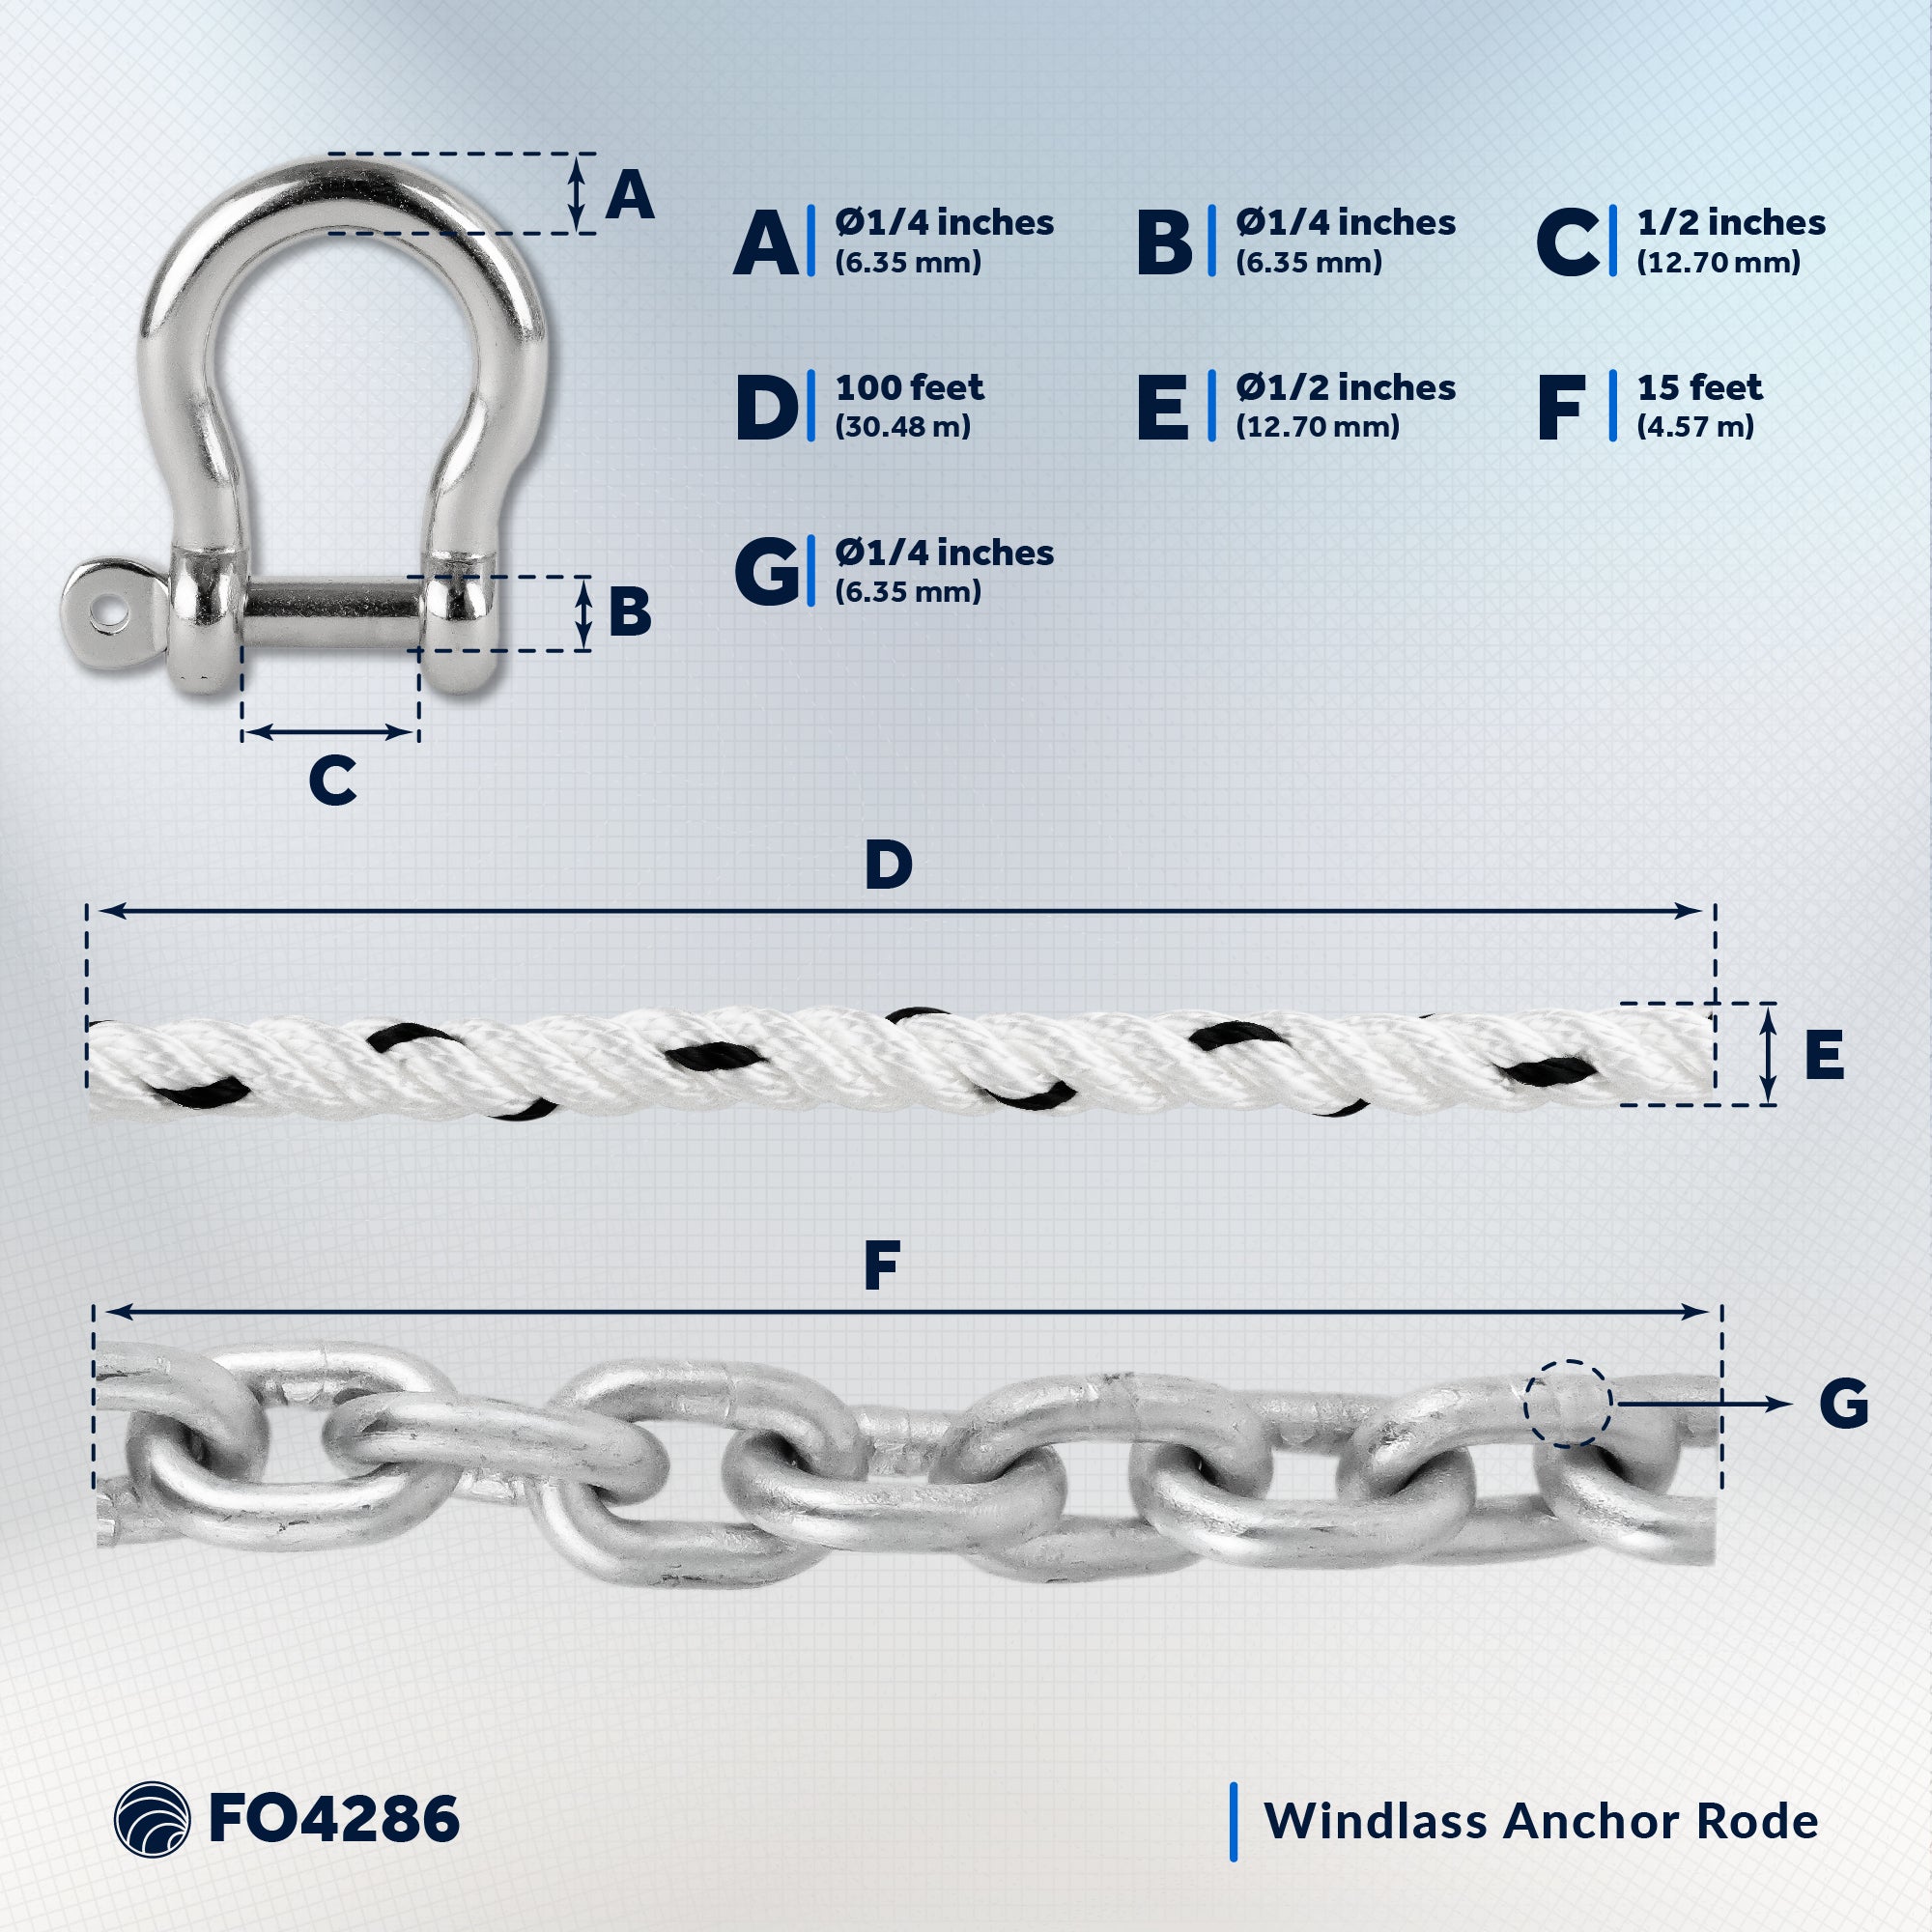 Windlass Anchor Rode, 1/2" x 100' Nylon 3-Strand Rope, 1/4" x 15' G4 Hot-Dipped Galvanized Steel Chain - FO4286